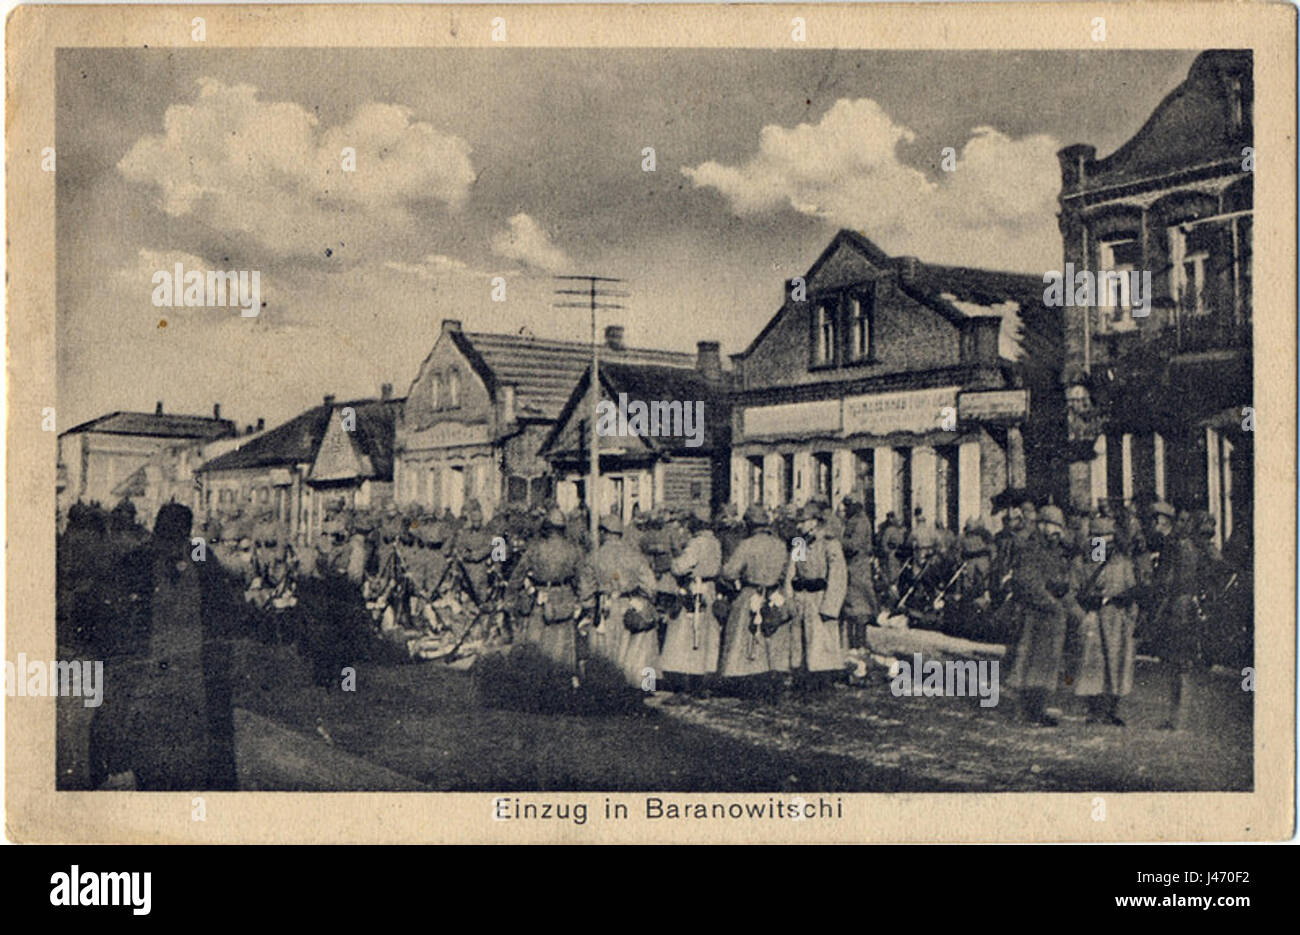 Niemcy uvachod 1915 m feldpost20 08 1916 Stock Photo